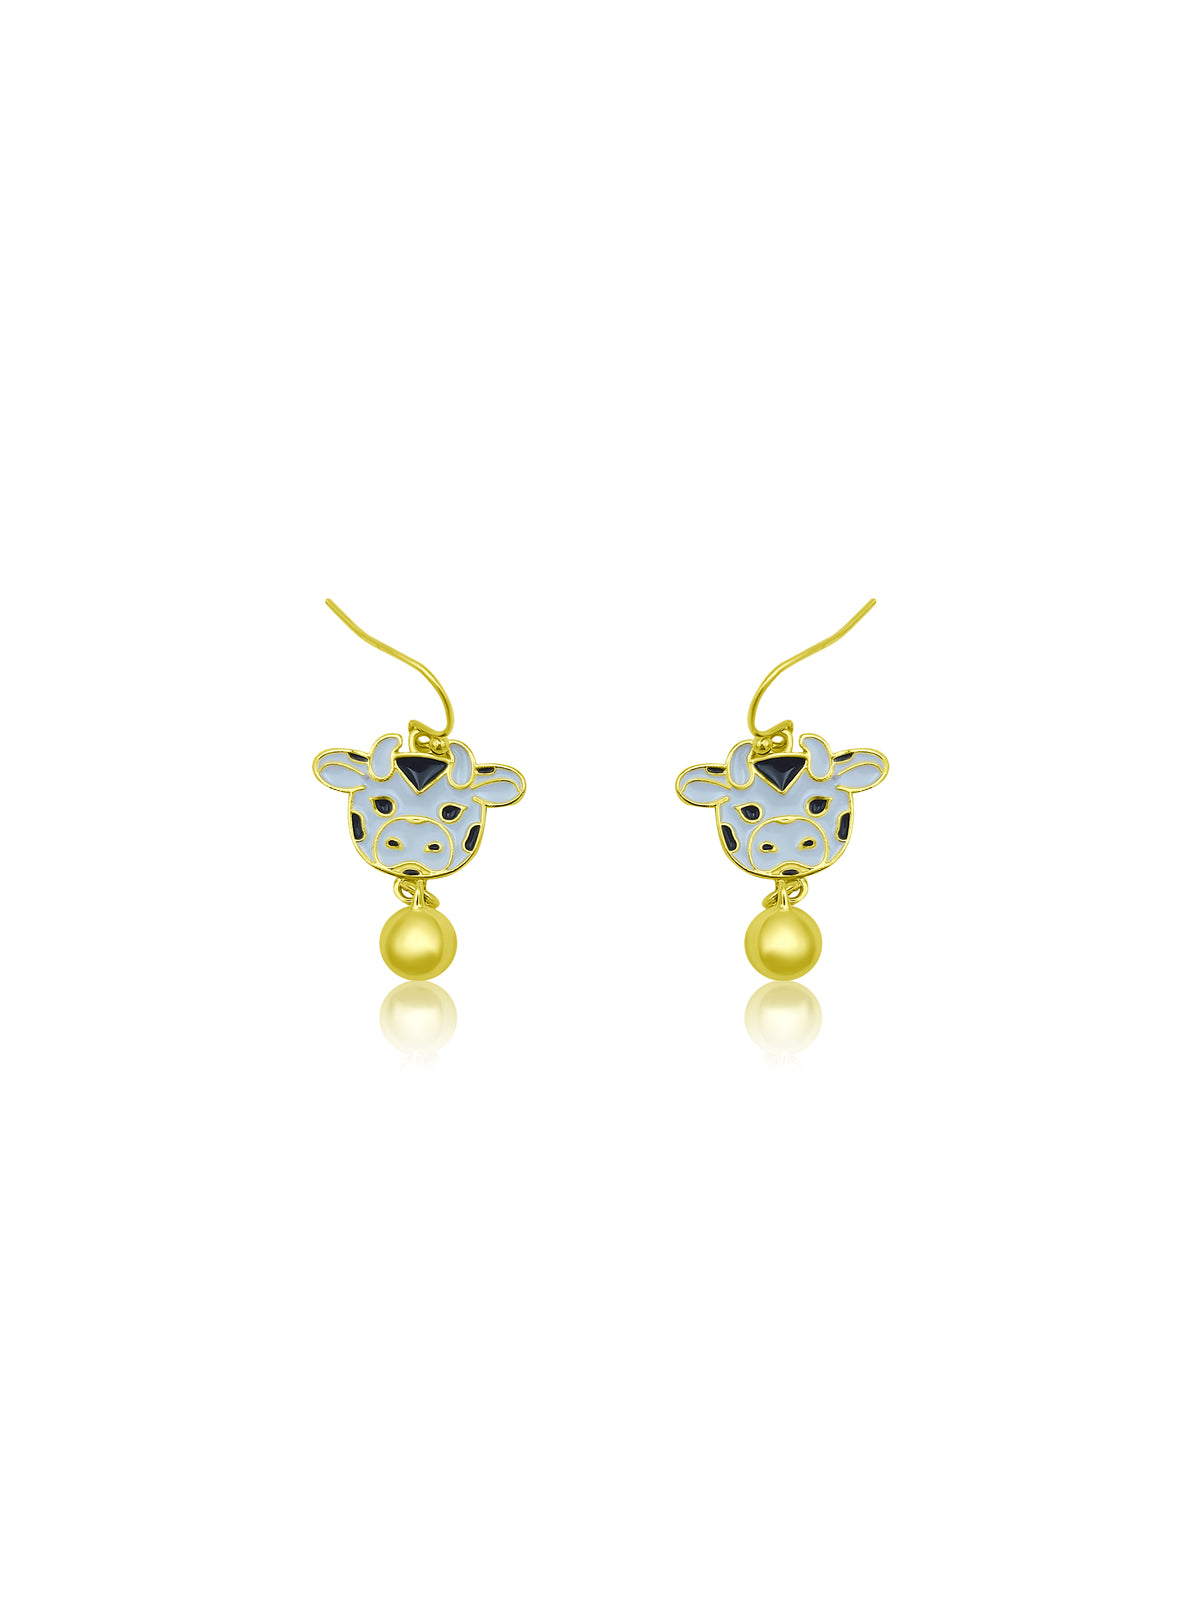 Moo Cow Dangle Earrings with Hanging Liberty Bell